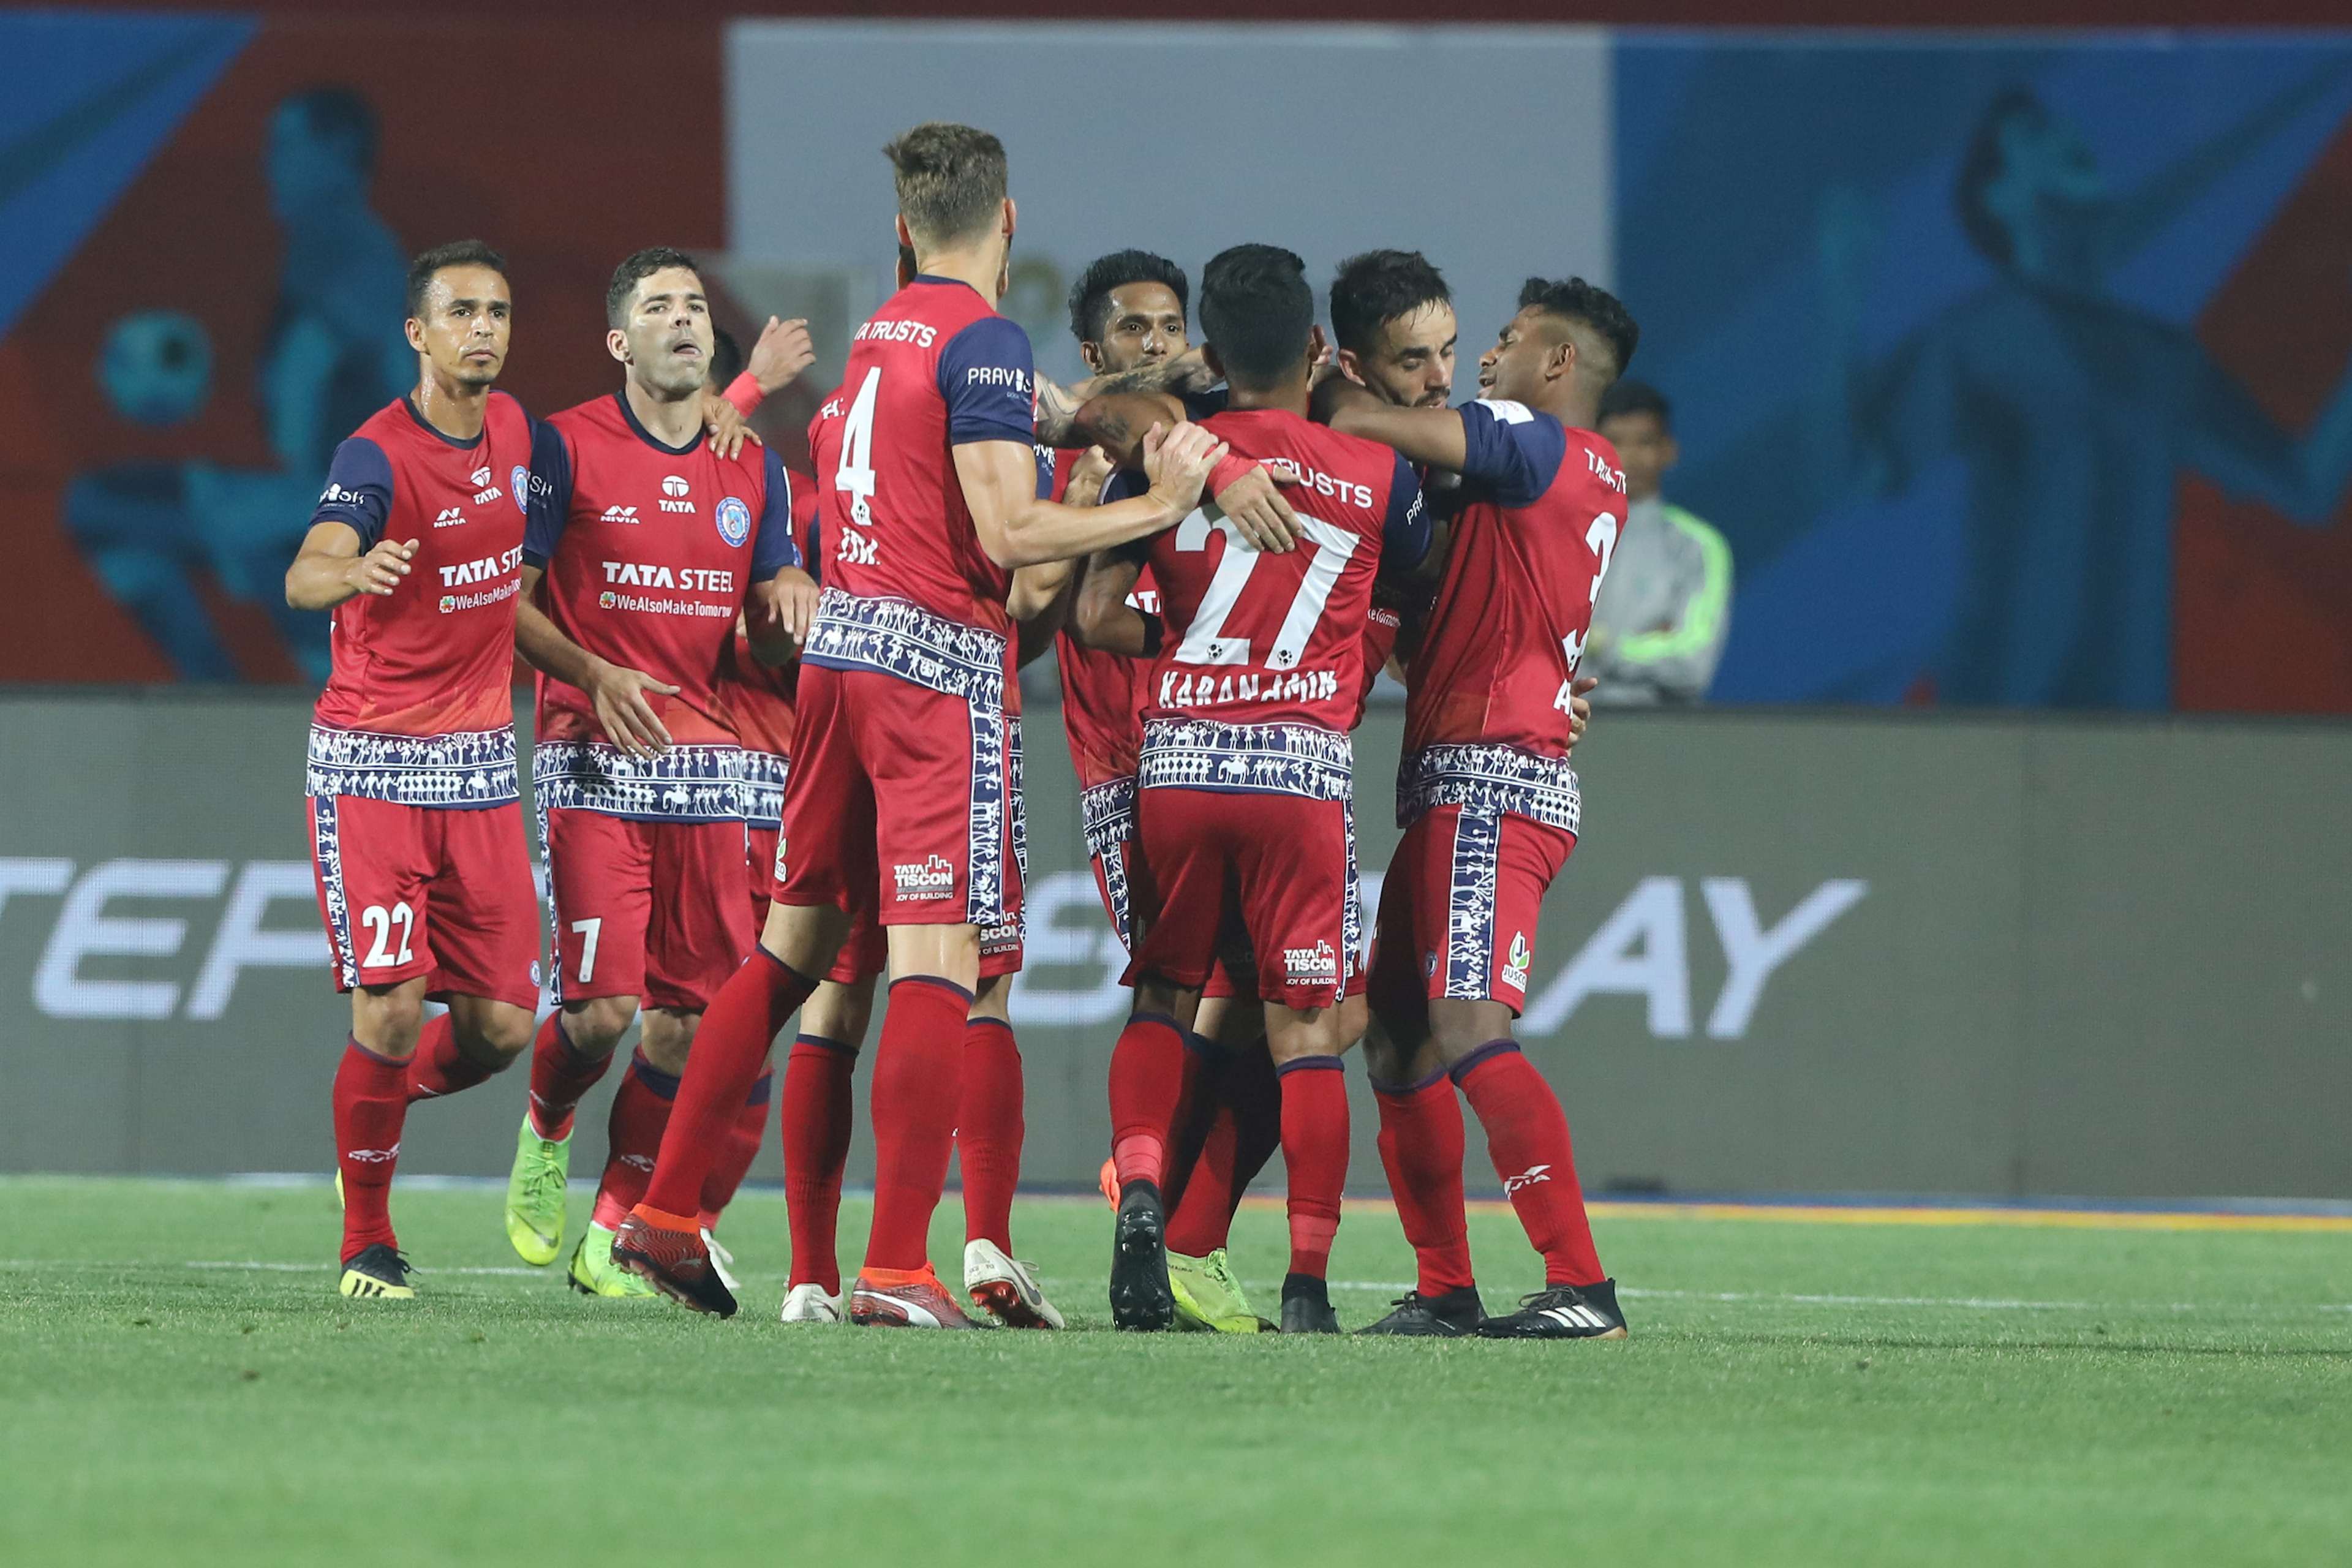 Jamshedpur v Bengaluru, Indian Super League